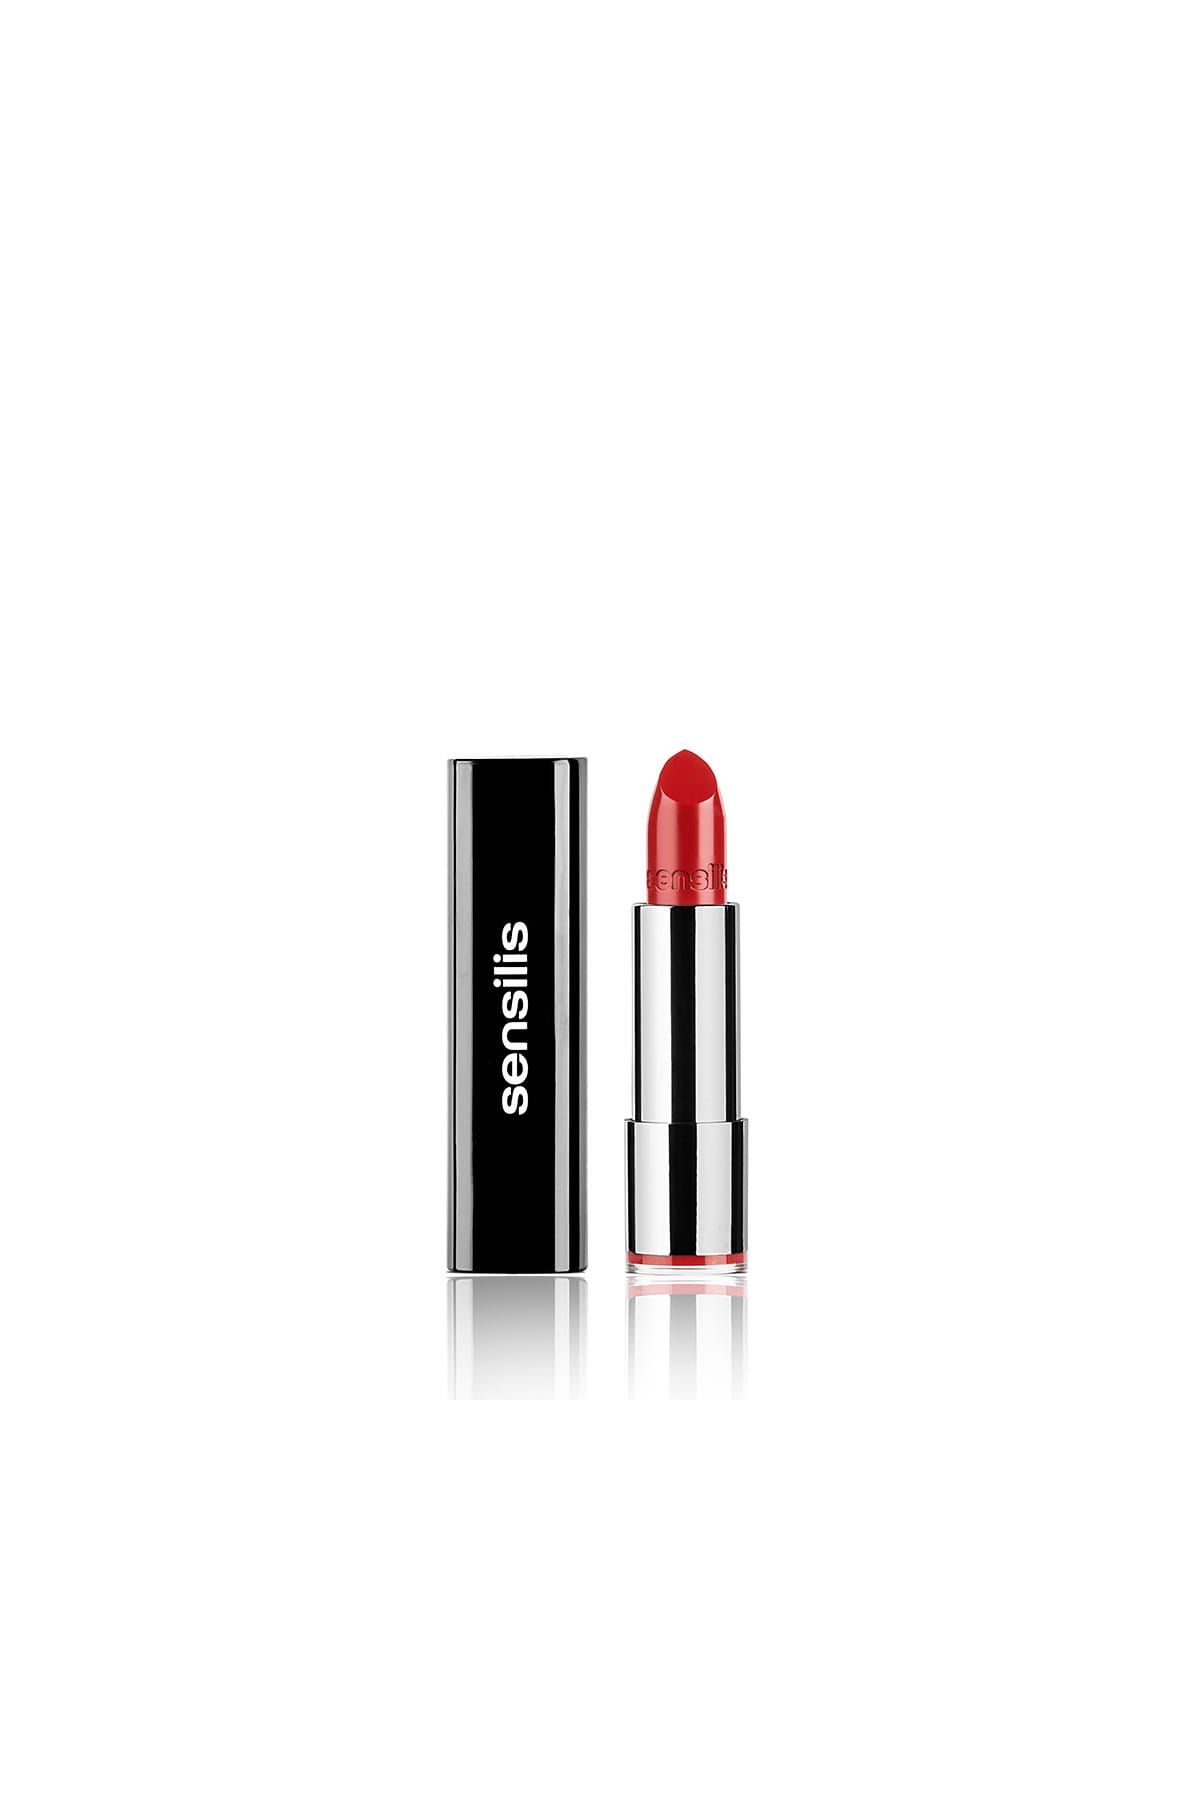 sensilis Ruj - Intense Matt Long-Lasting Lipstick 103 Rubıs 8428749517405